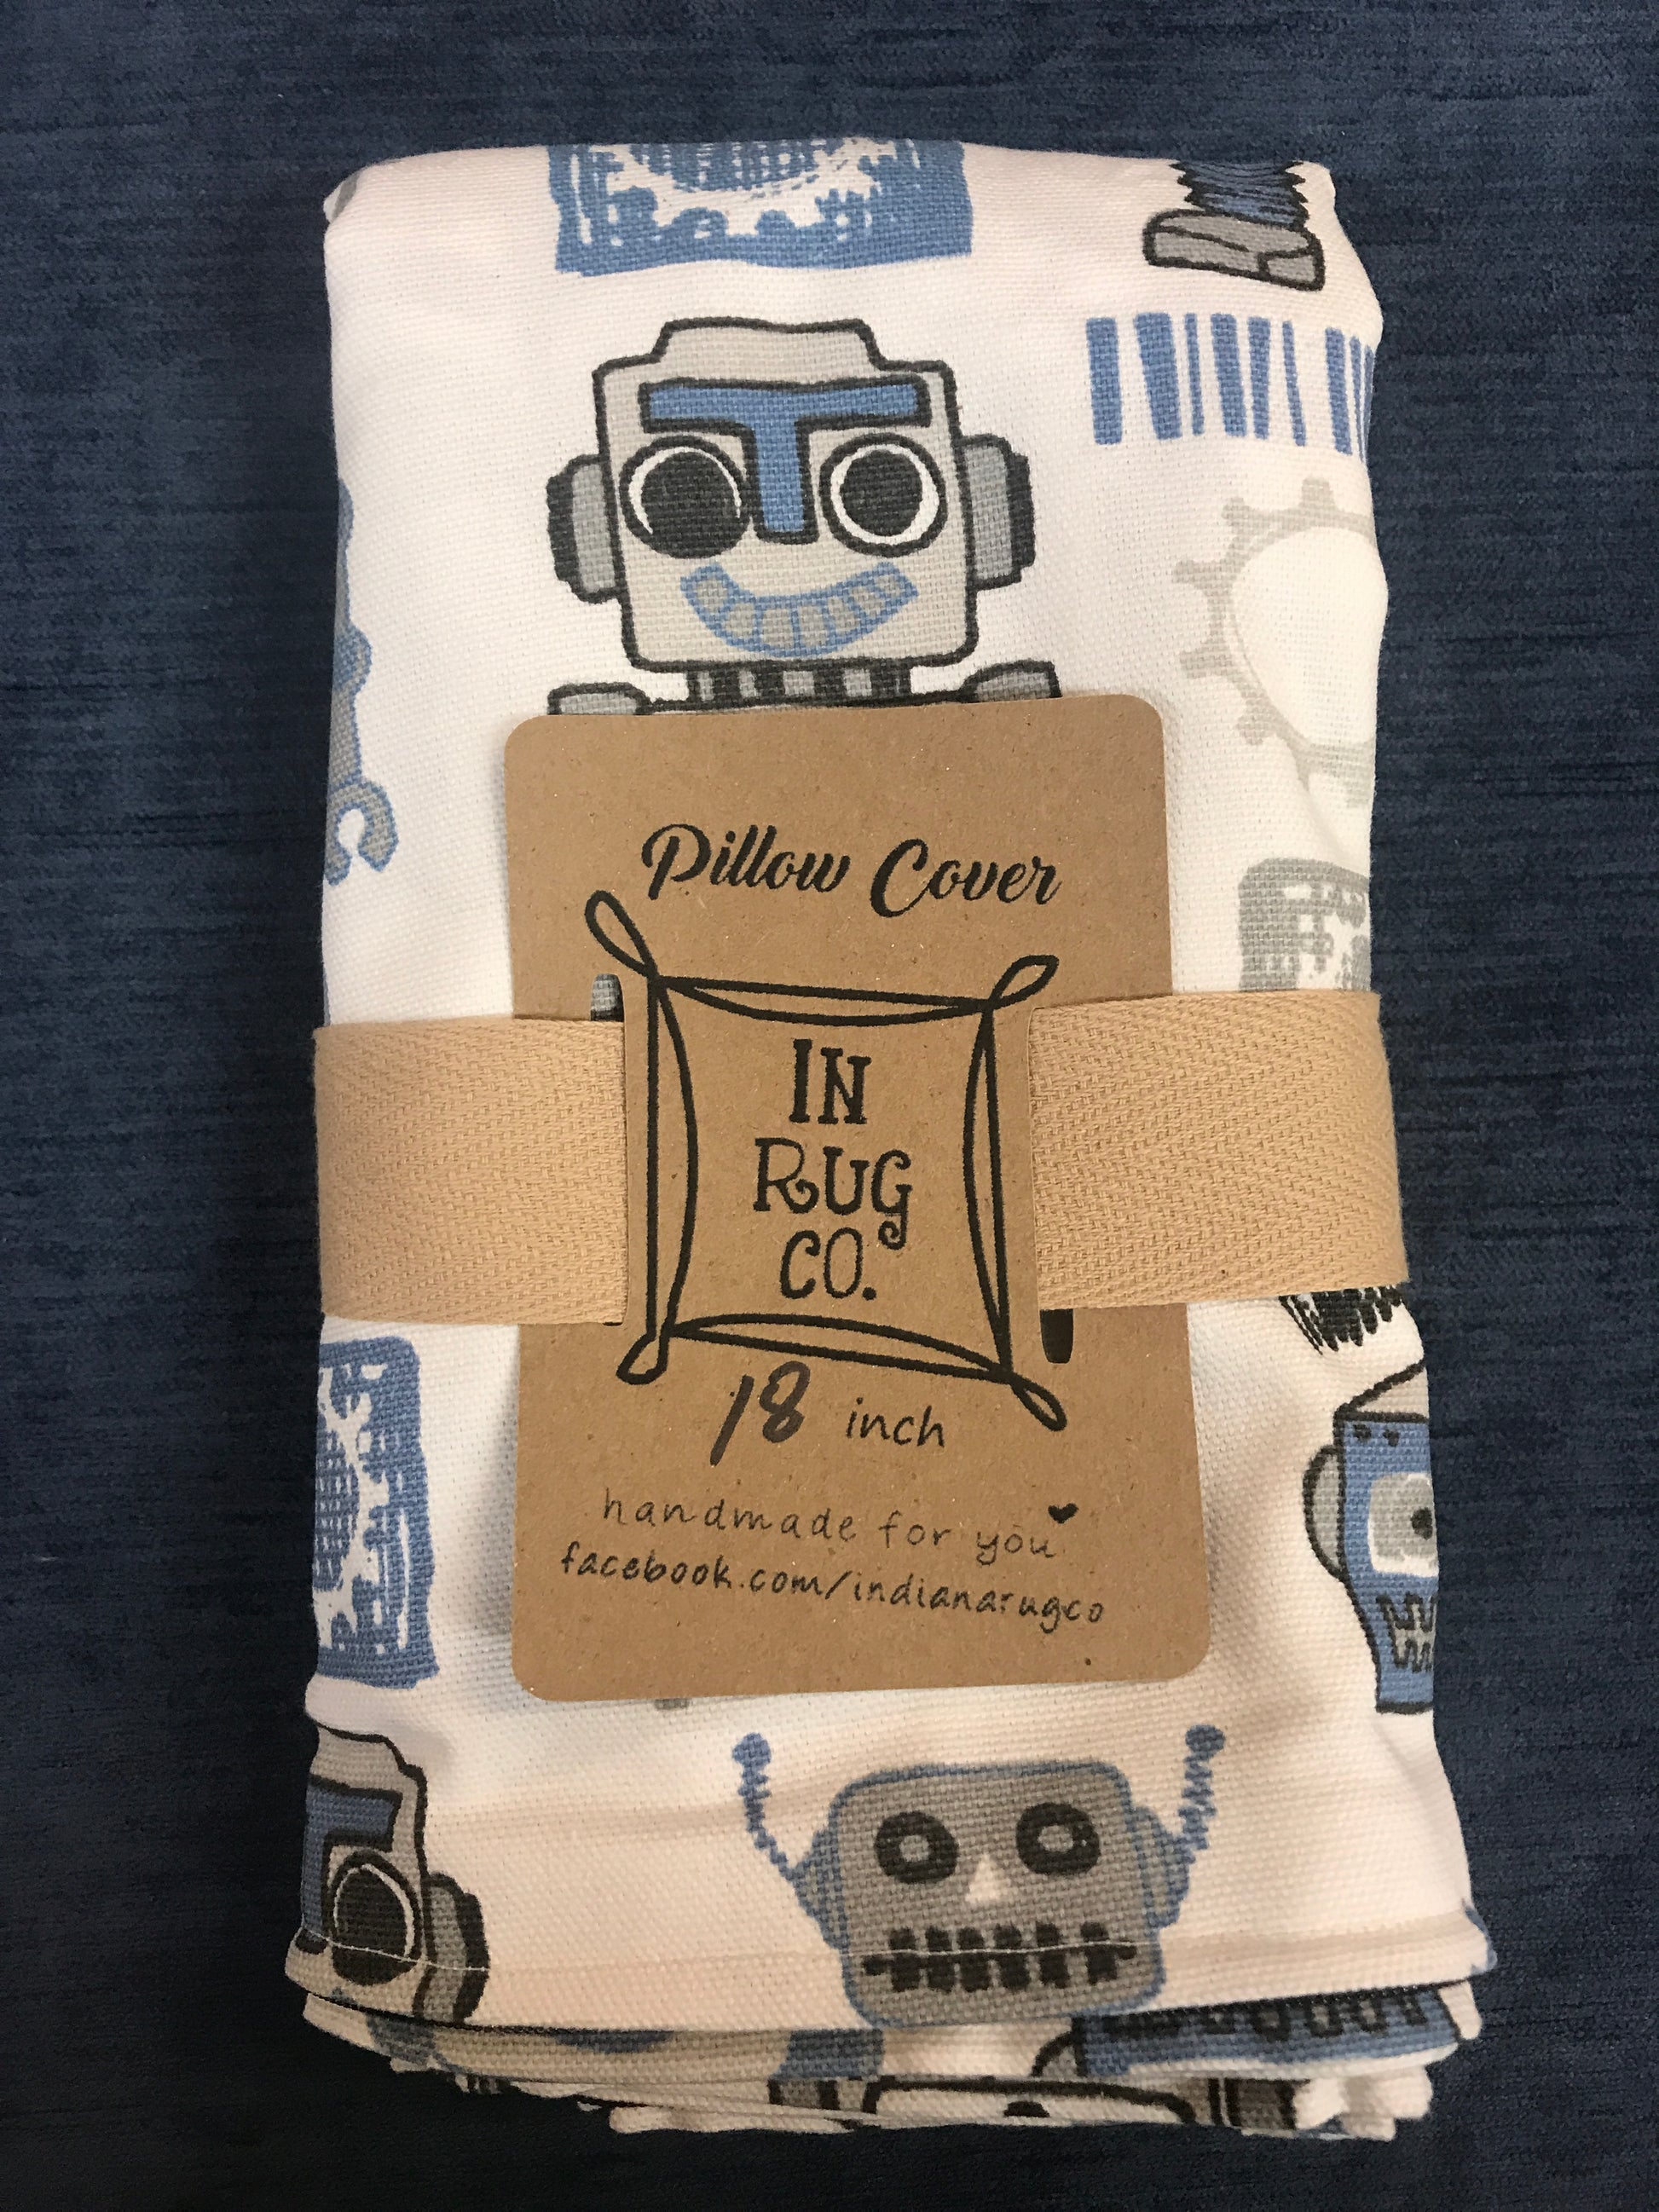 18" Robot Gear Pillow Covers - InRugCo Studio & Gift Shop